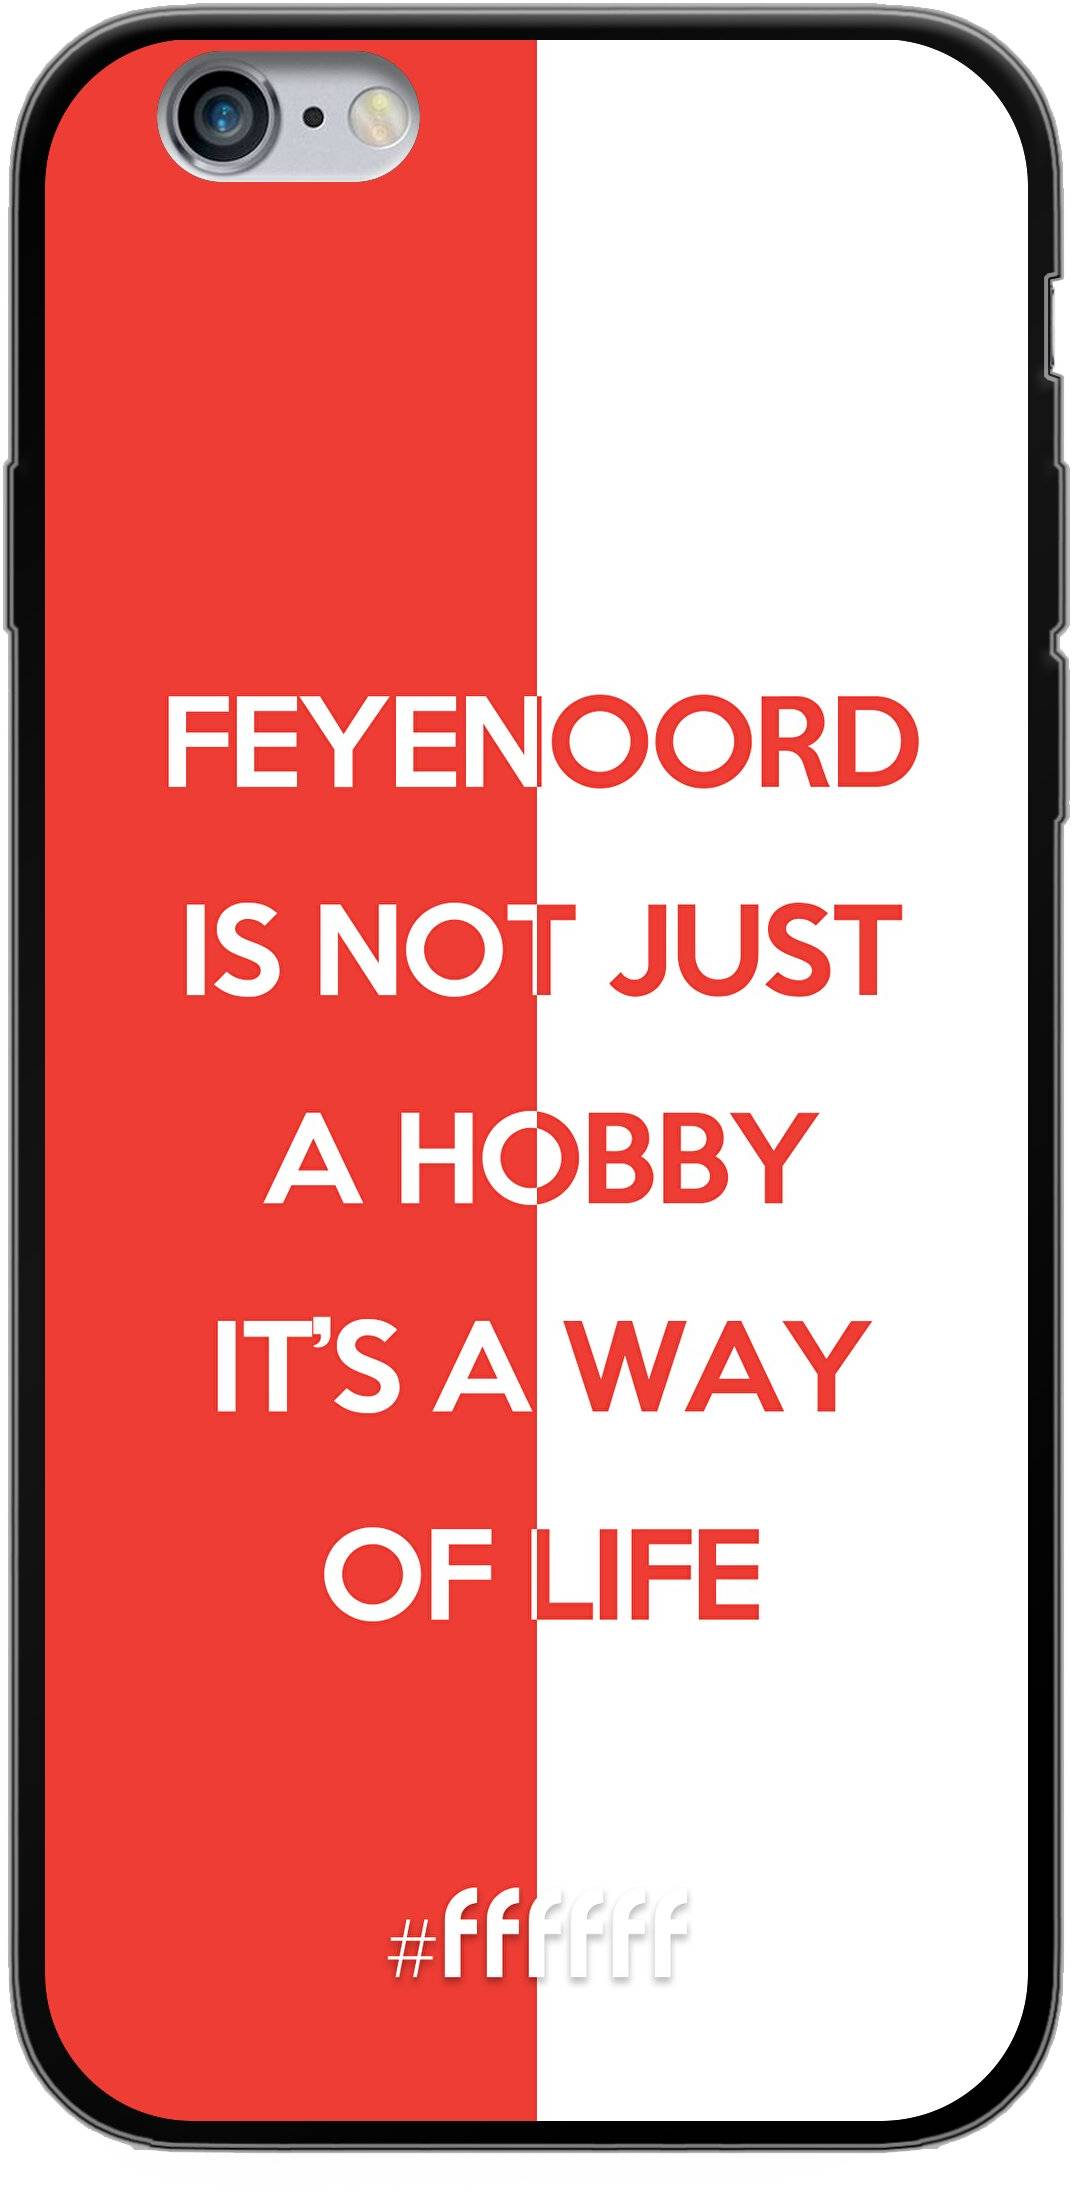 Feyenoord - Way of life iPhone 6s